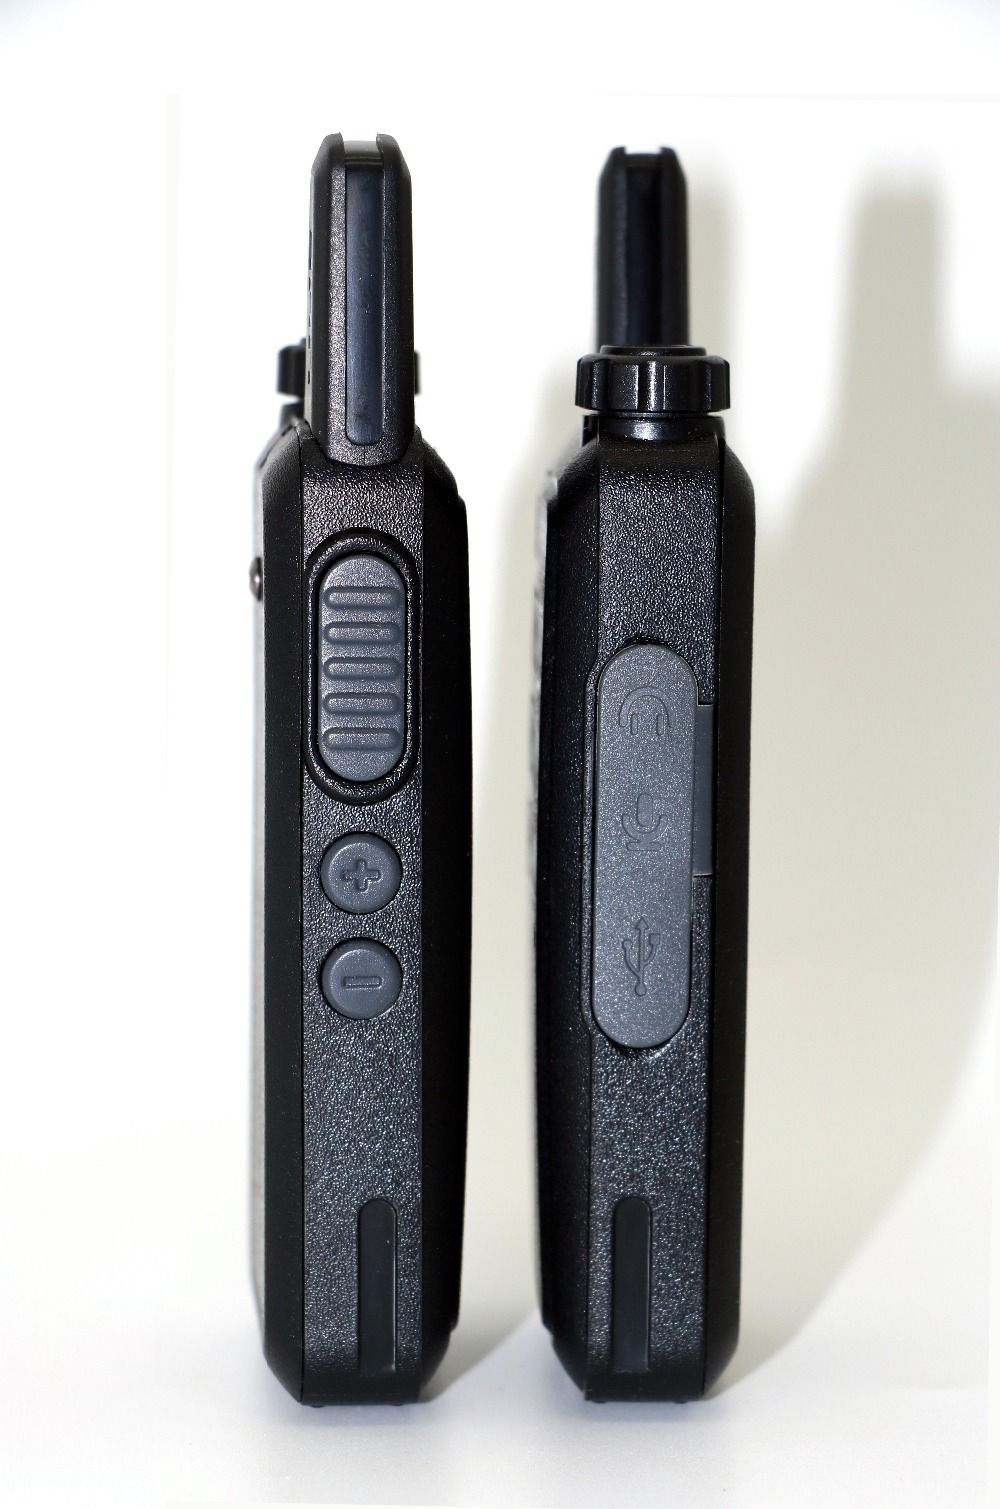 Baofeng-BF-R5-Mini-Walkie-Talkie-with-Headset-5W-power-400-470Mhz-Frequency-Two-Way-Radio-1358251